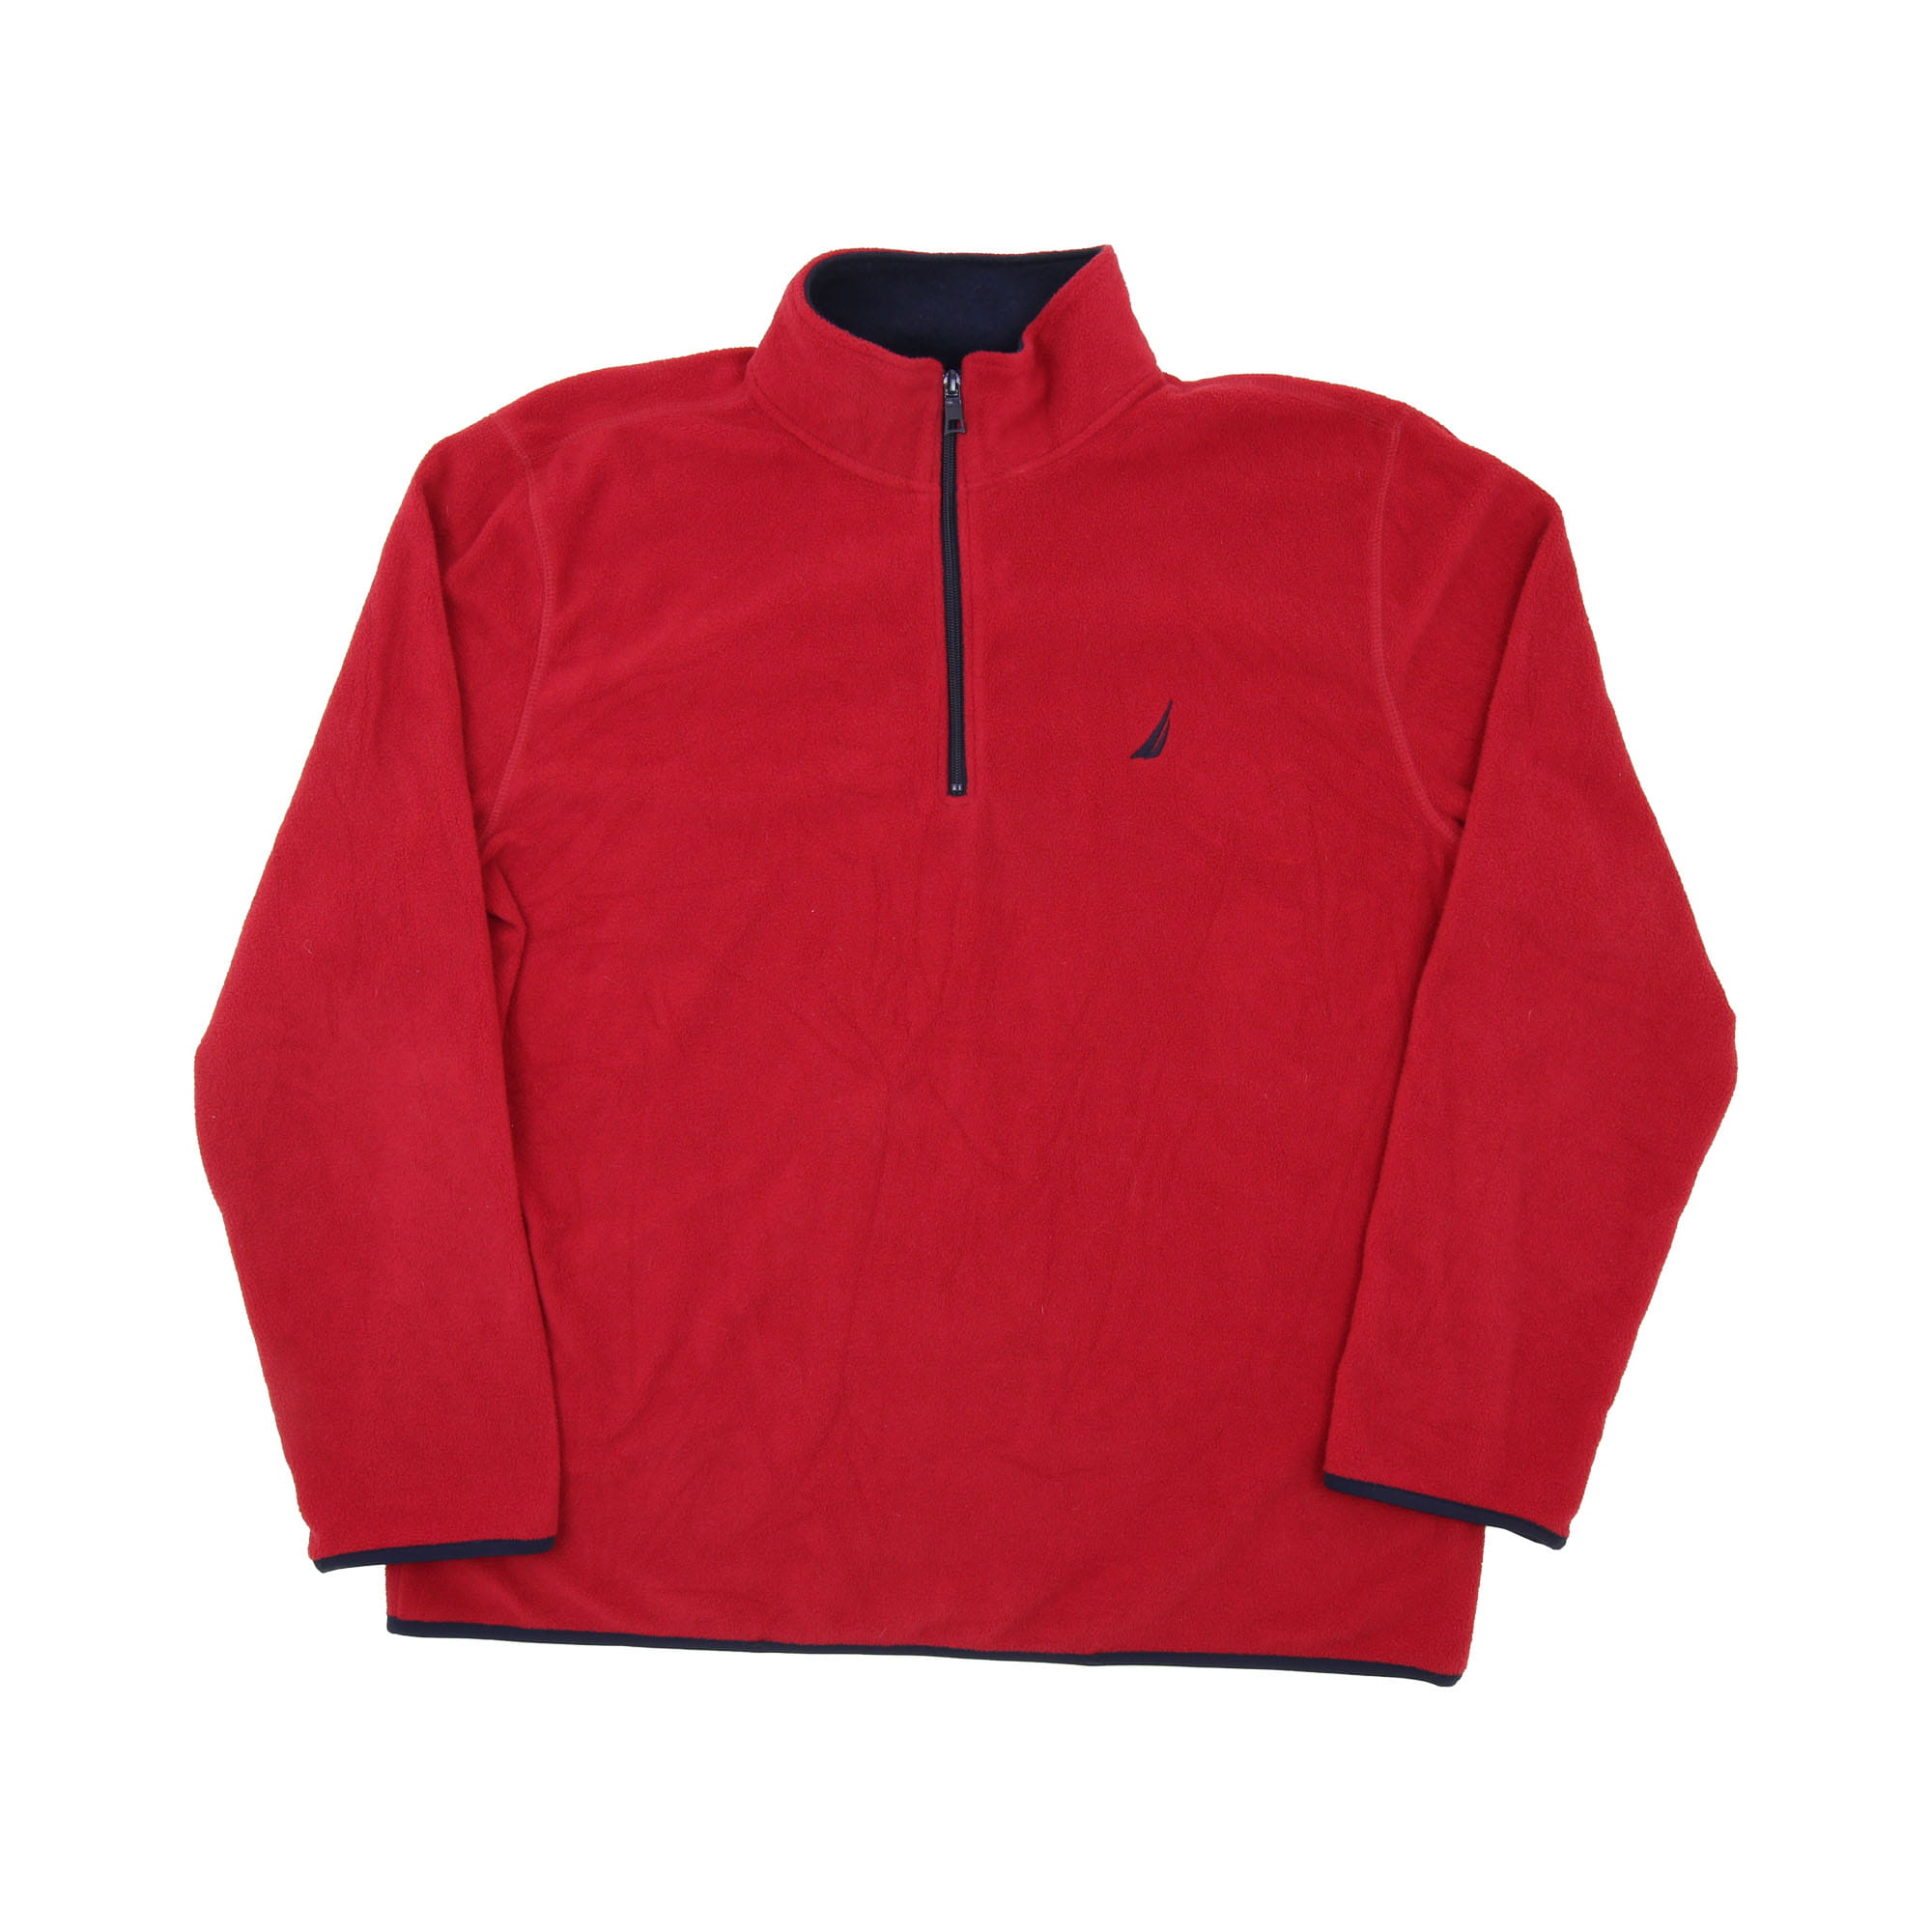 Nautica Fleece Red -  L/XL